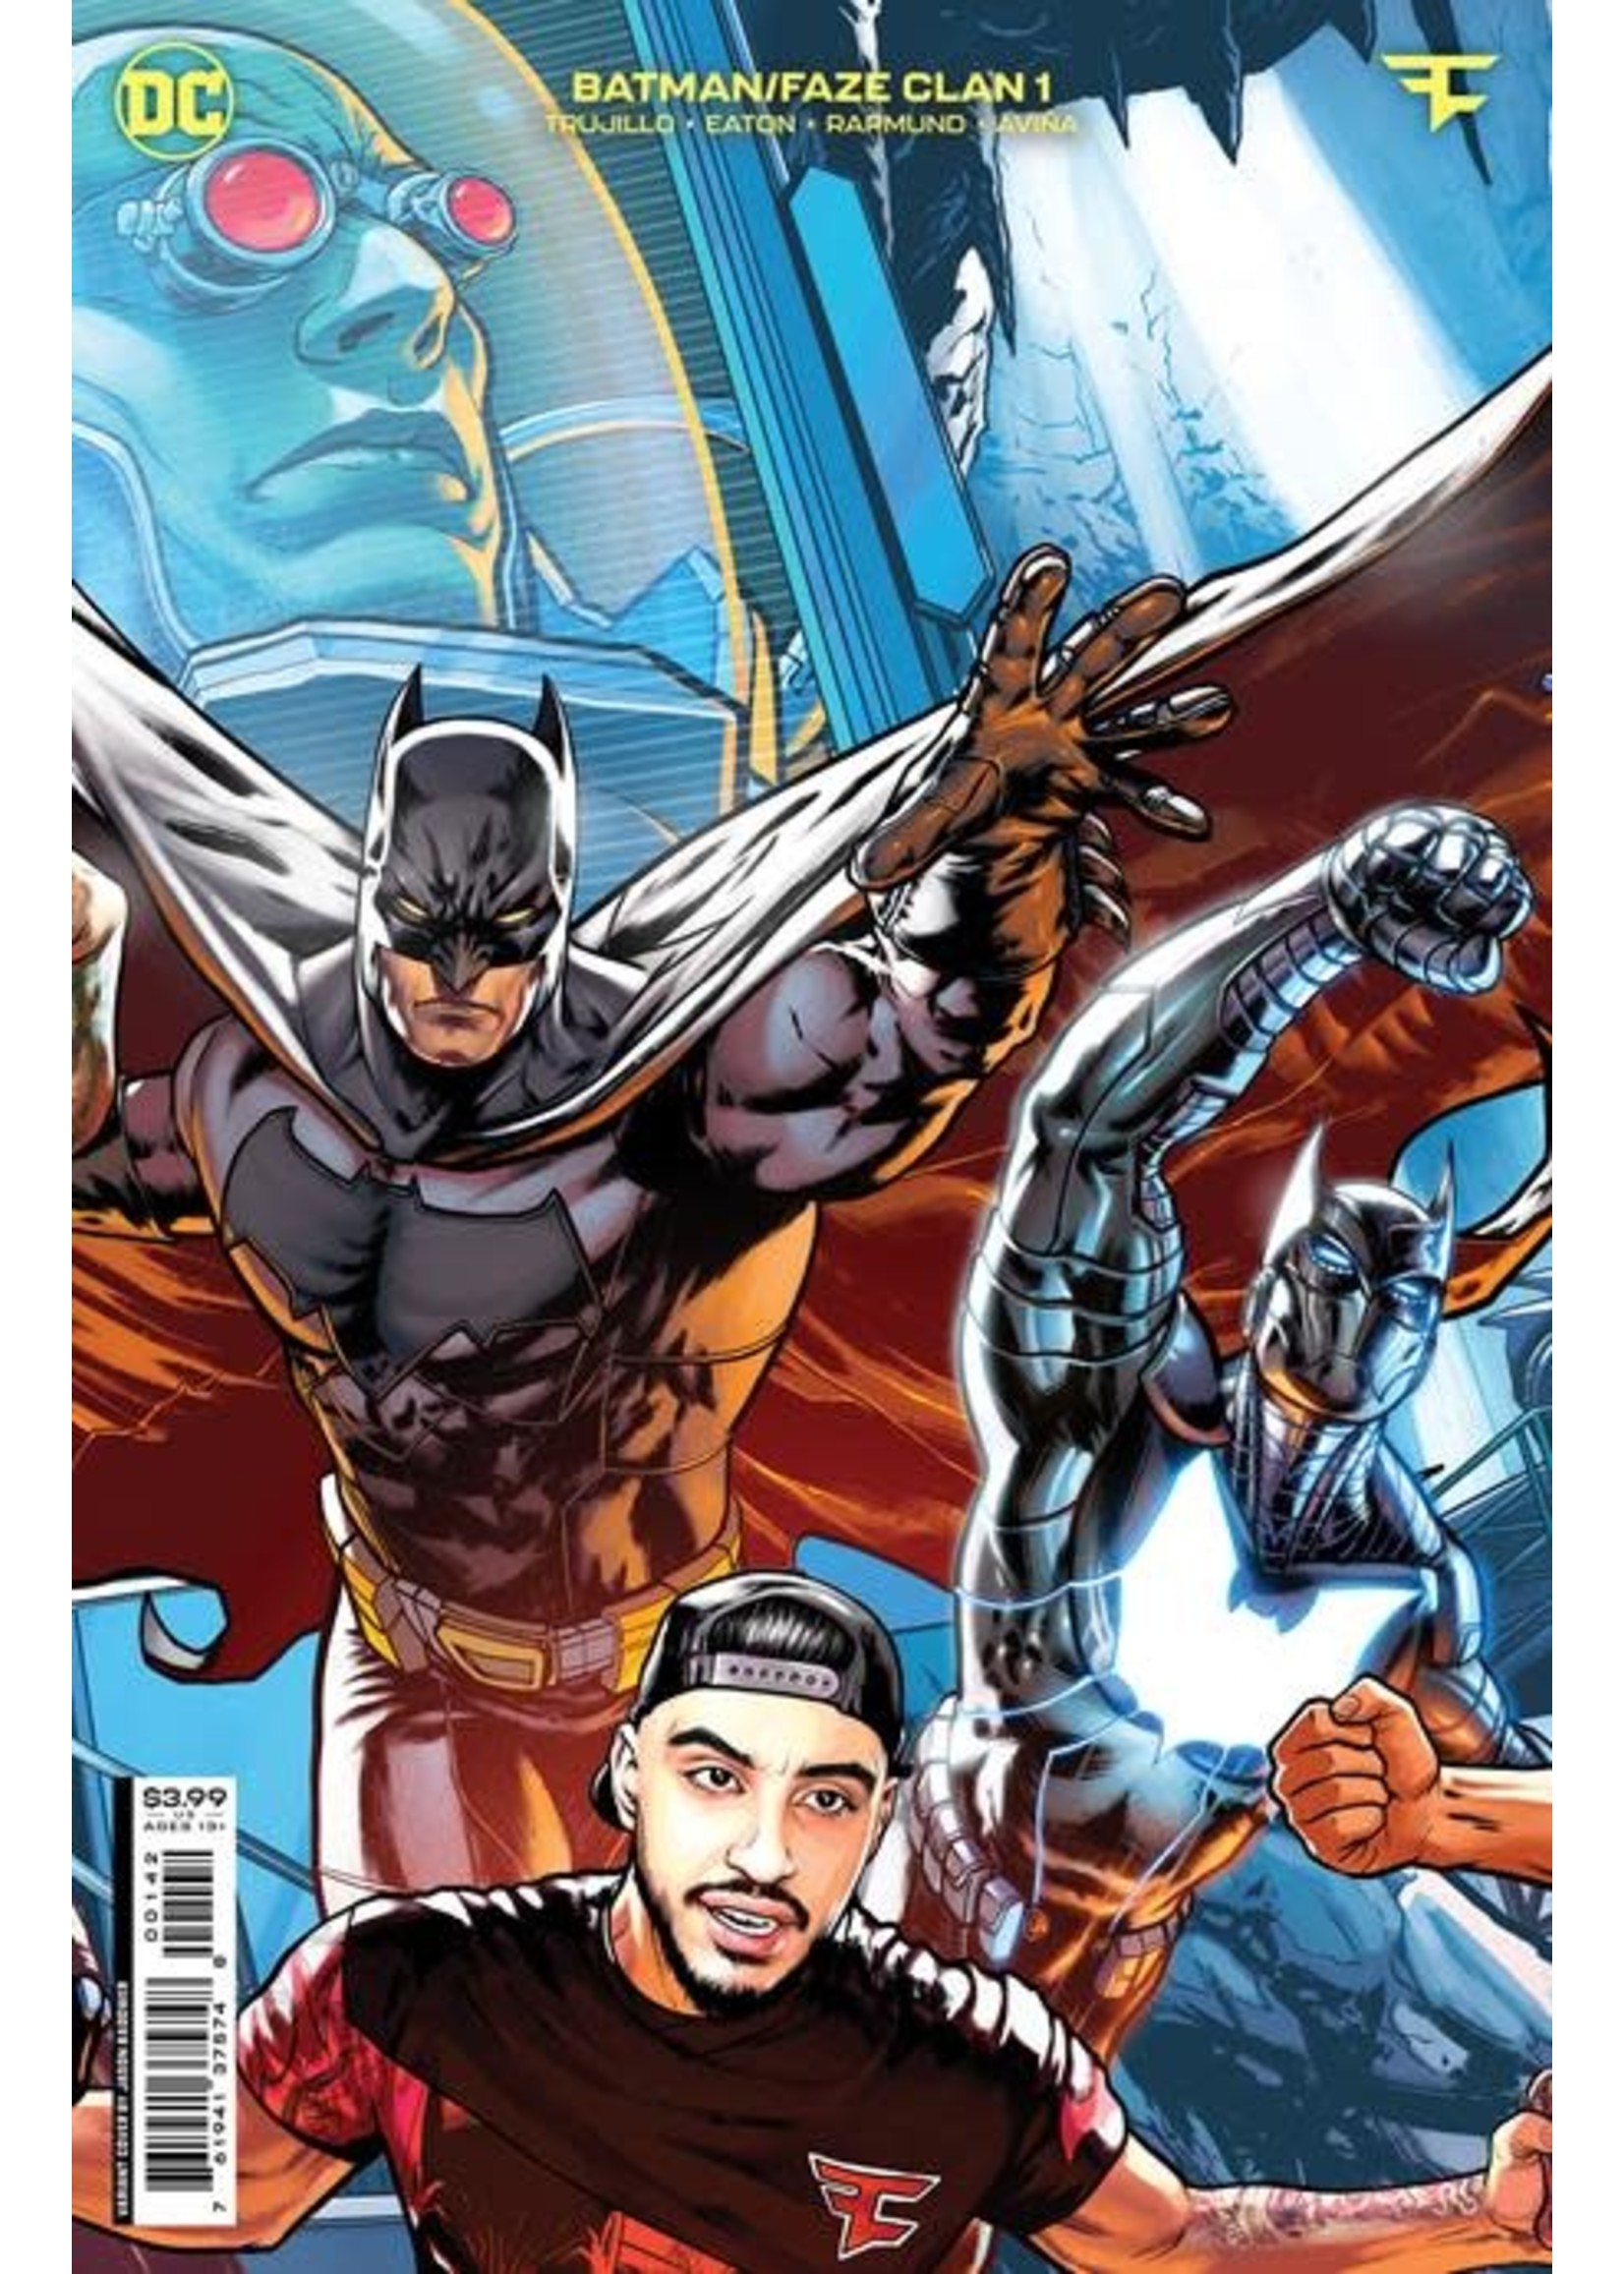 DC COMICS BATMAN FAZE CLAN #1 (ONE SHOT) CVR D CONN 3 BATMAN - Rolling Tales